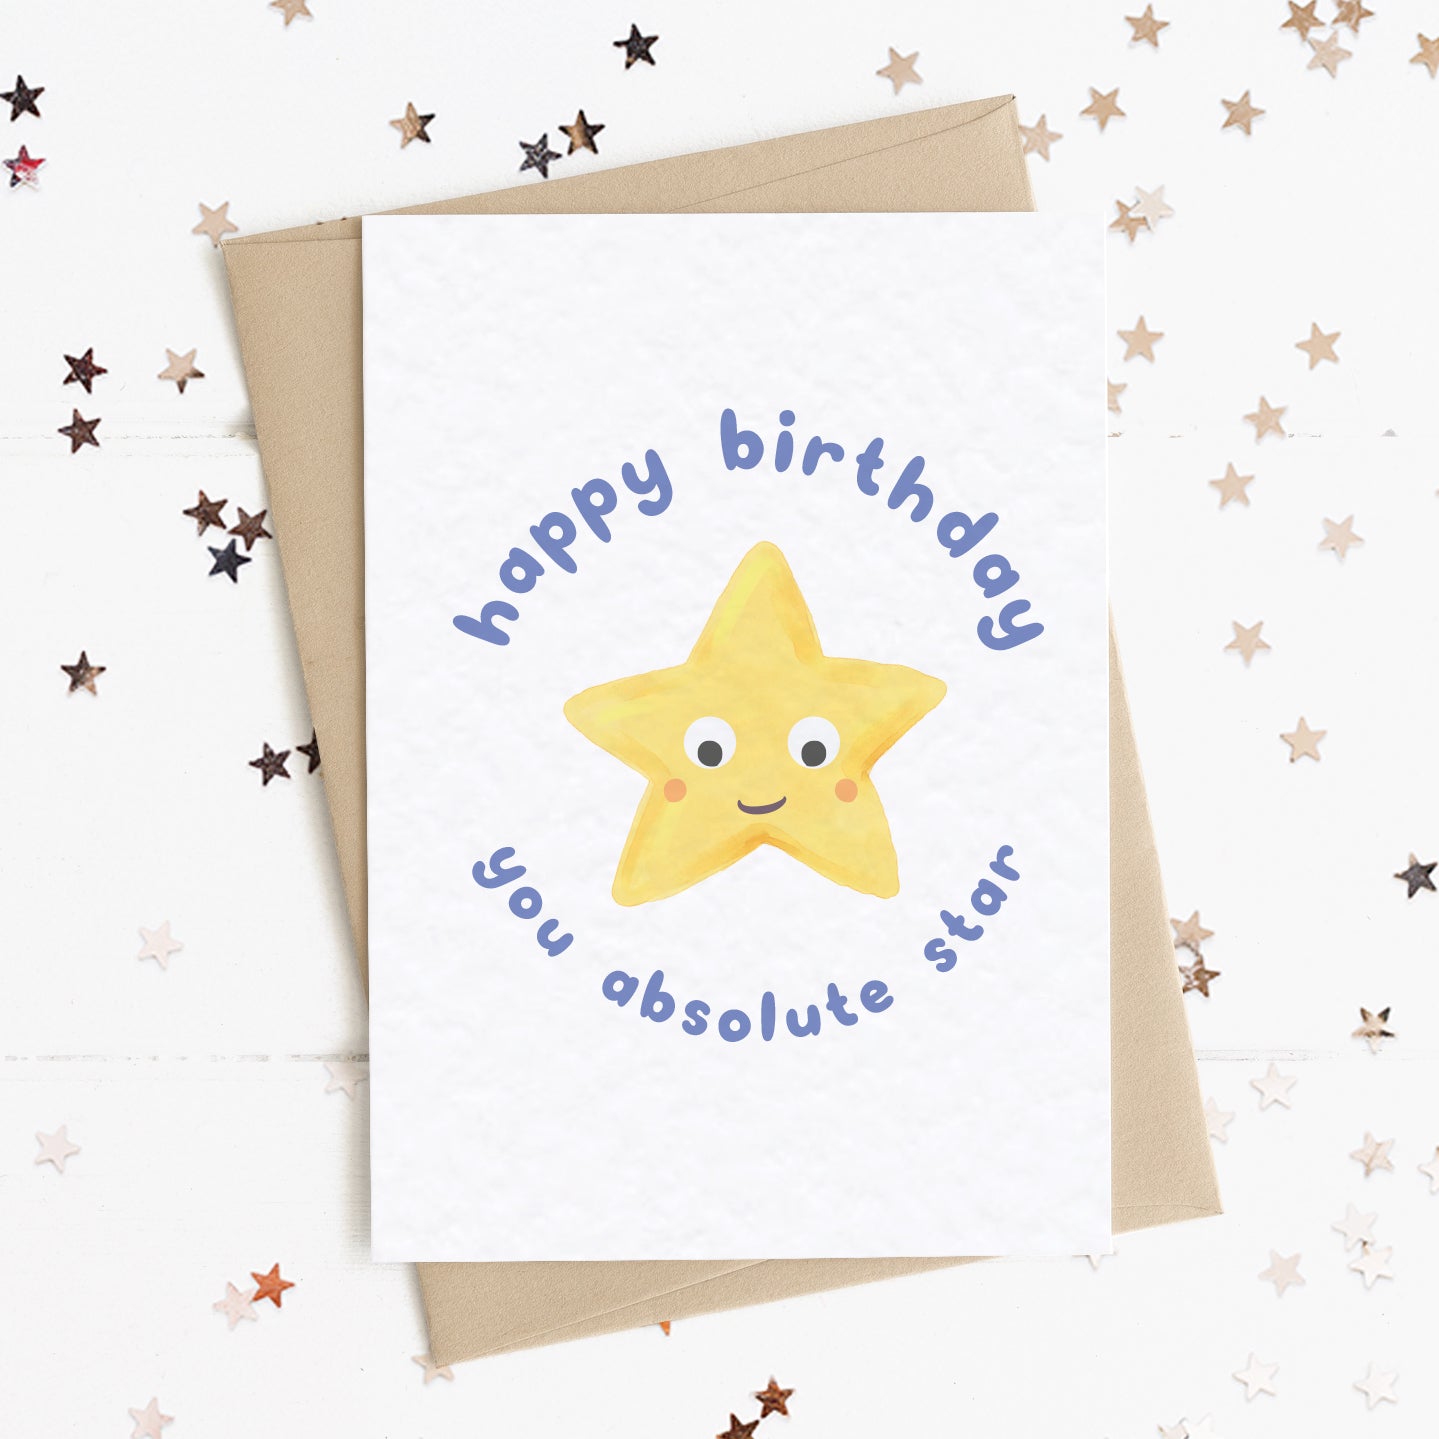 "Happy Birthday You Absolute Star" Cute Celebration Card